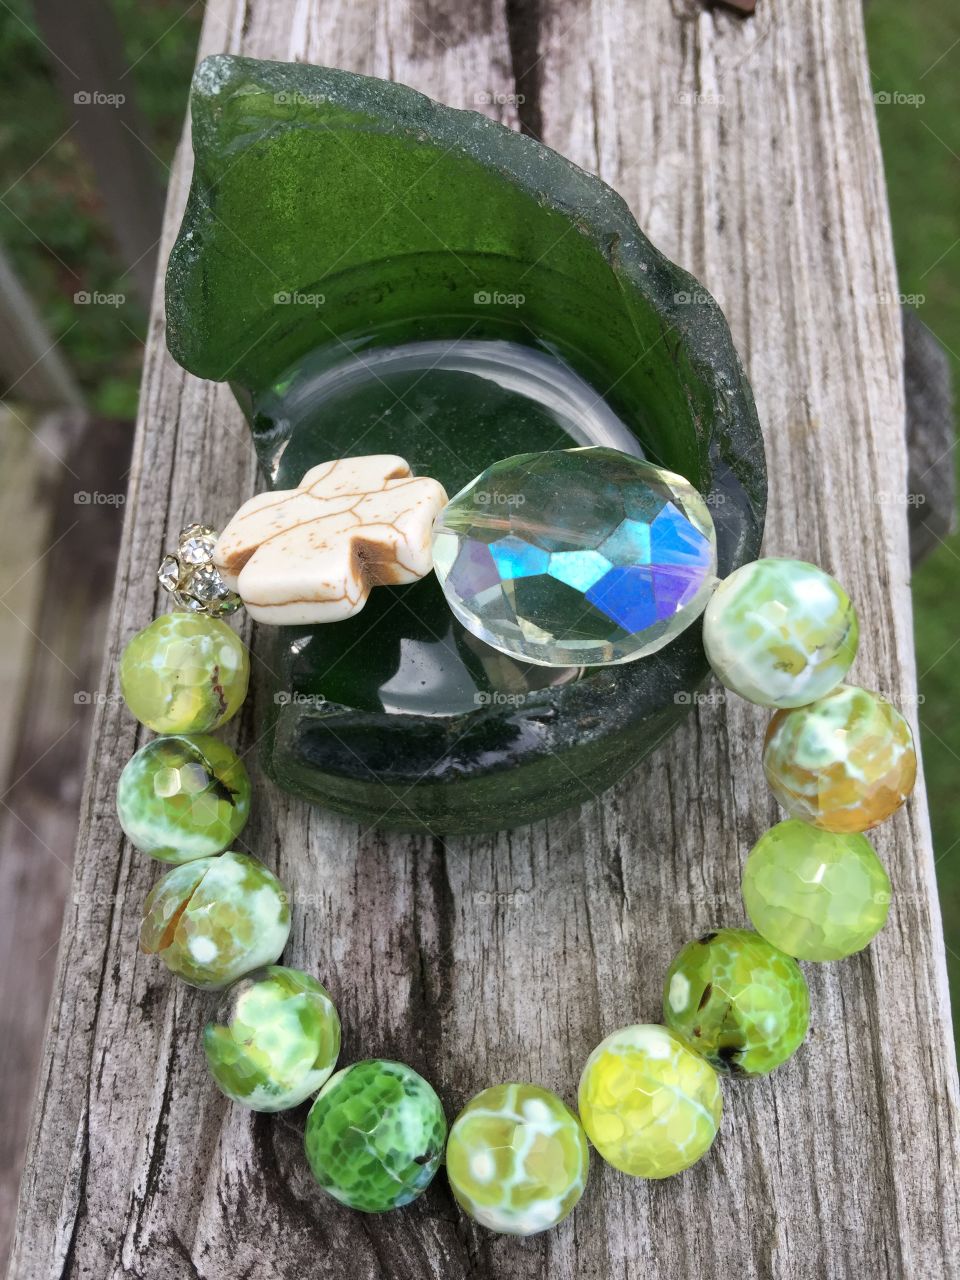 Green bracelet on glass